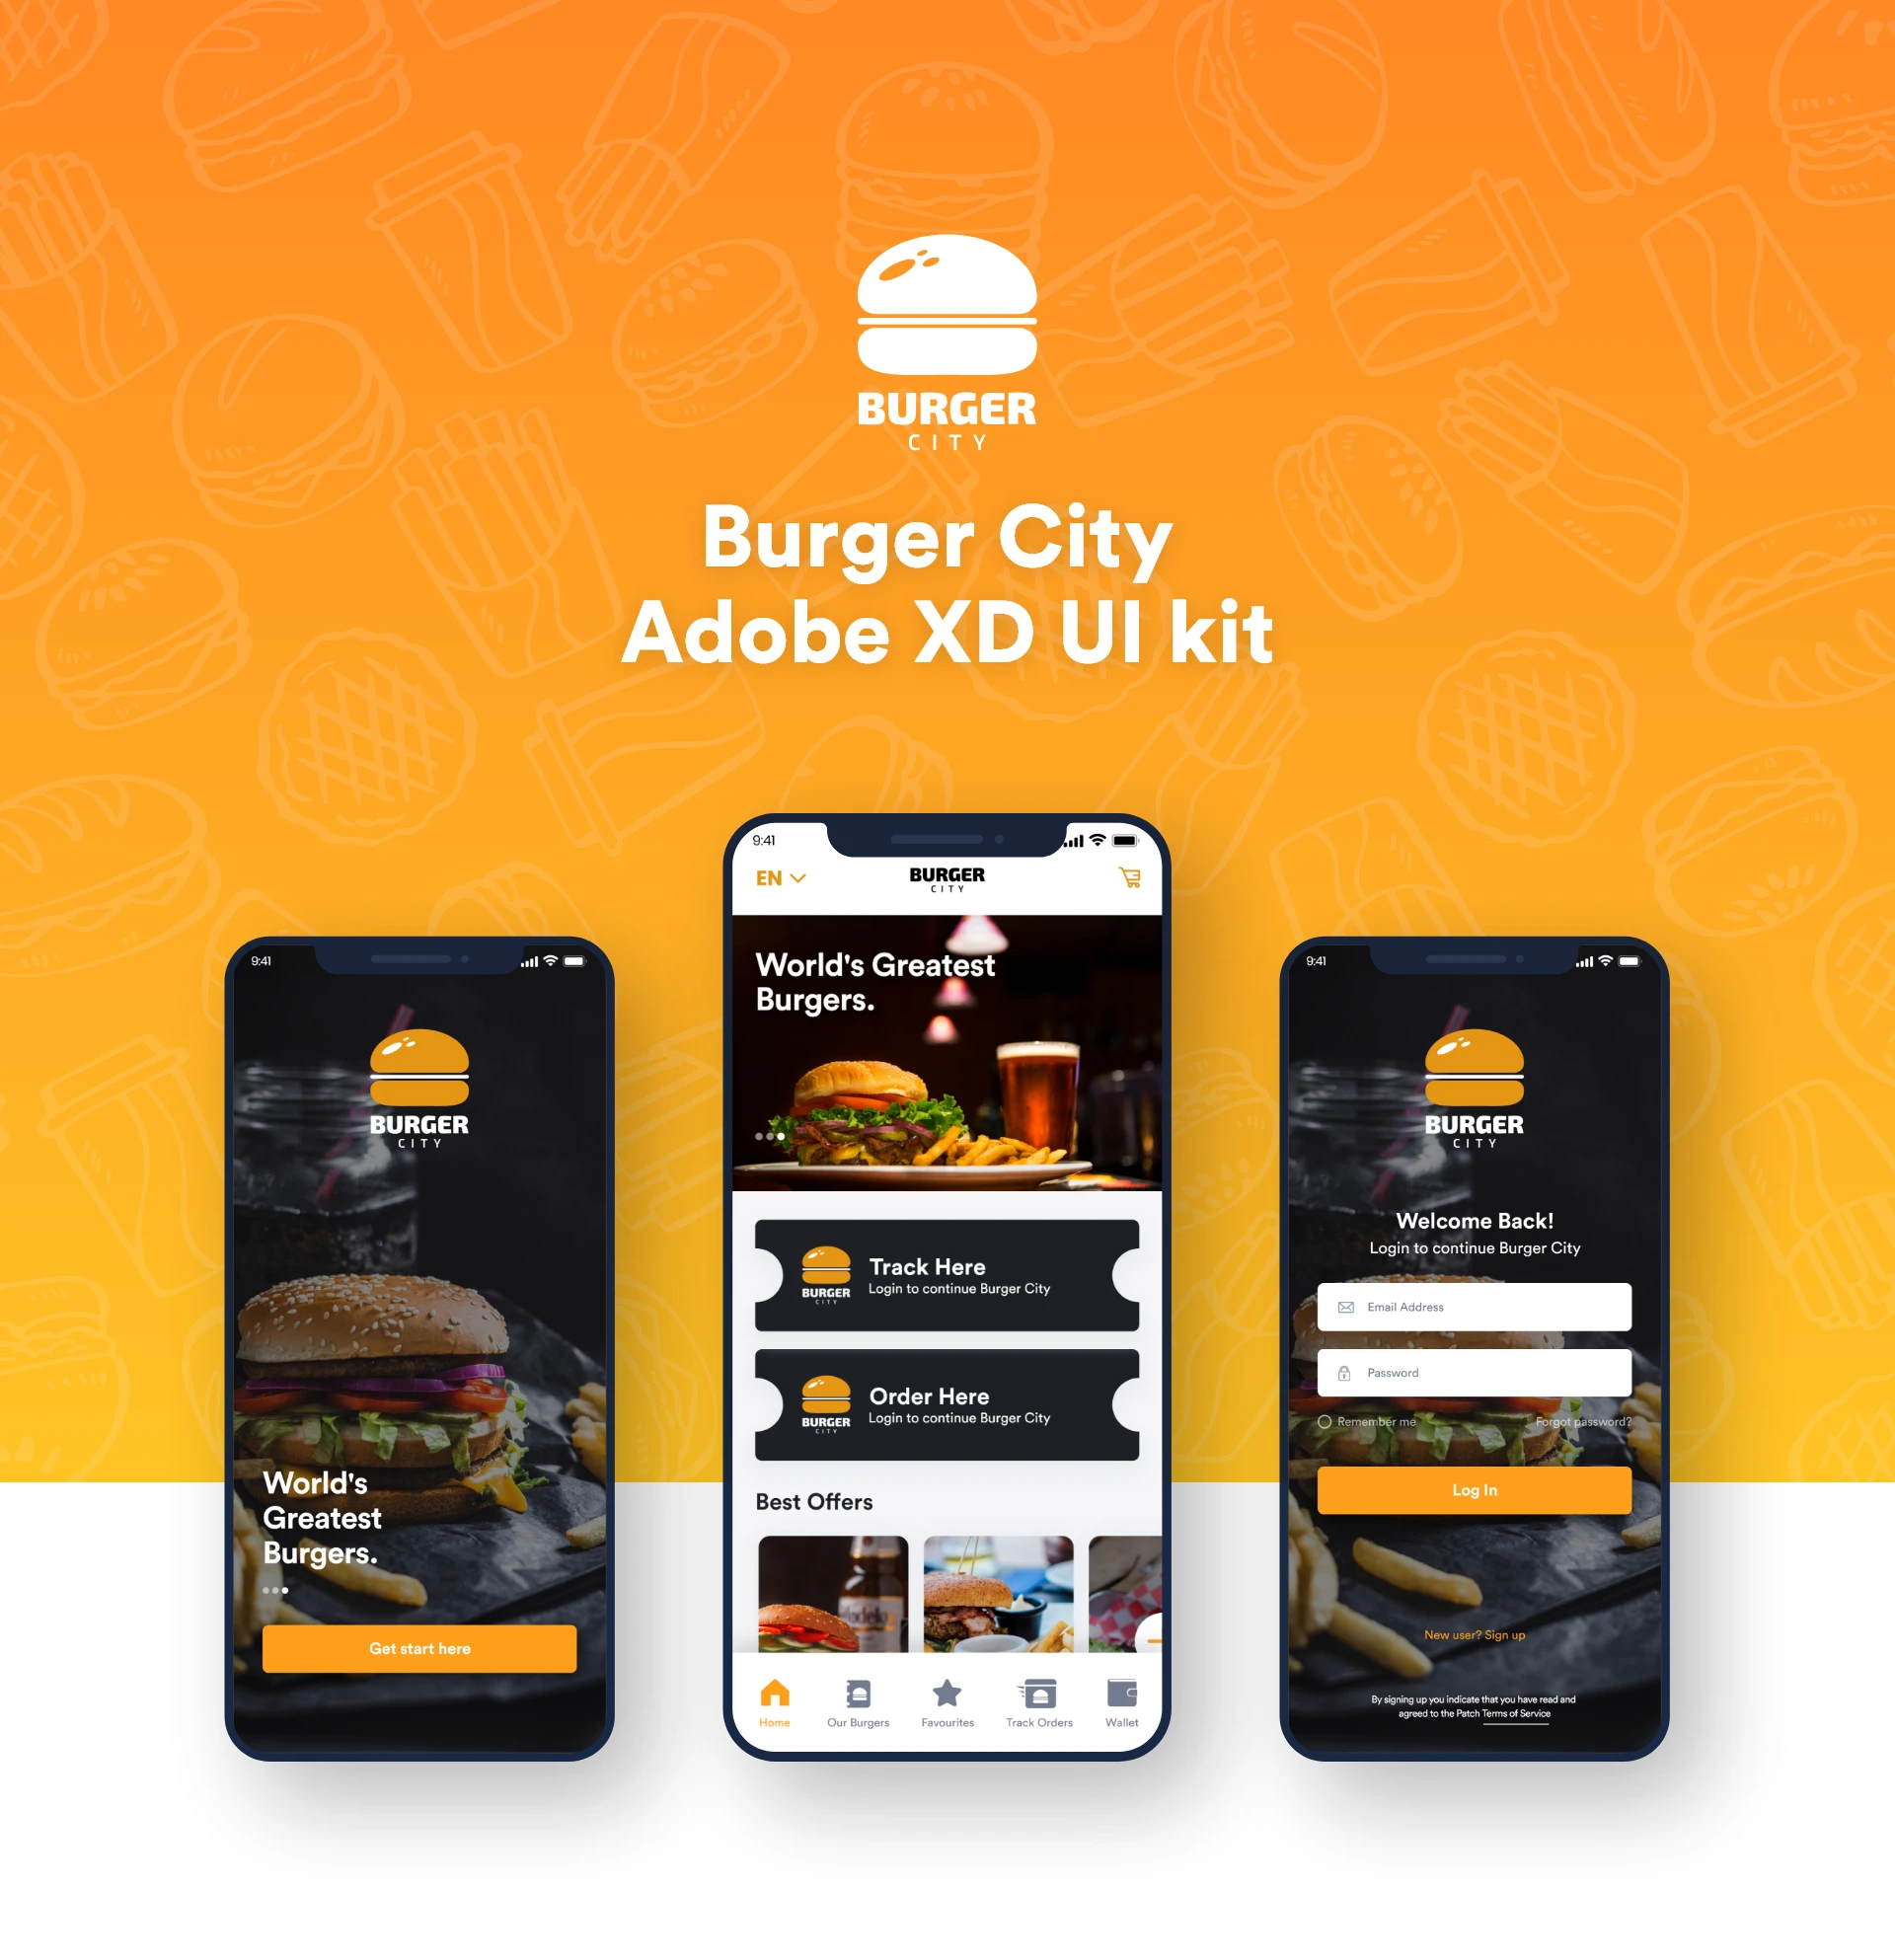 Burger City - Free Adobe XD UI Kit